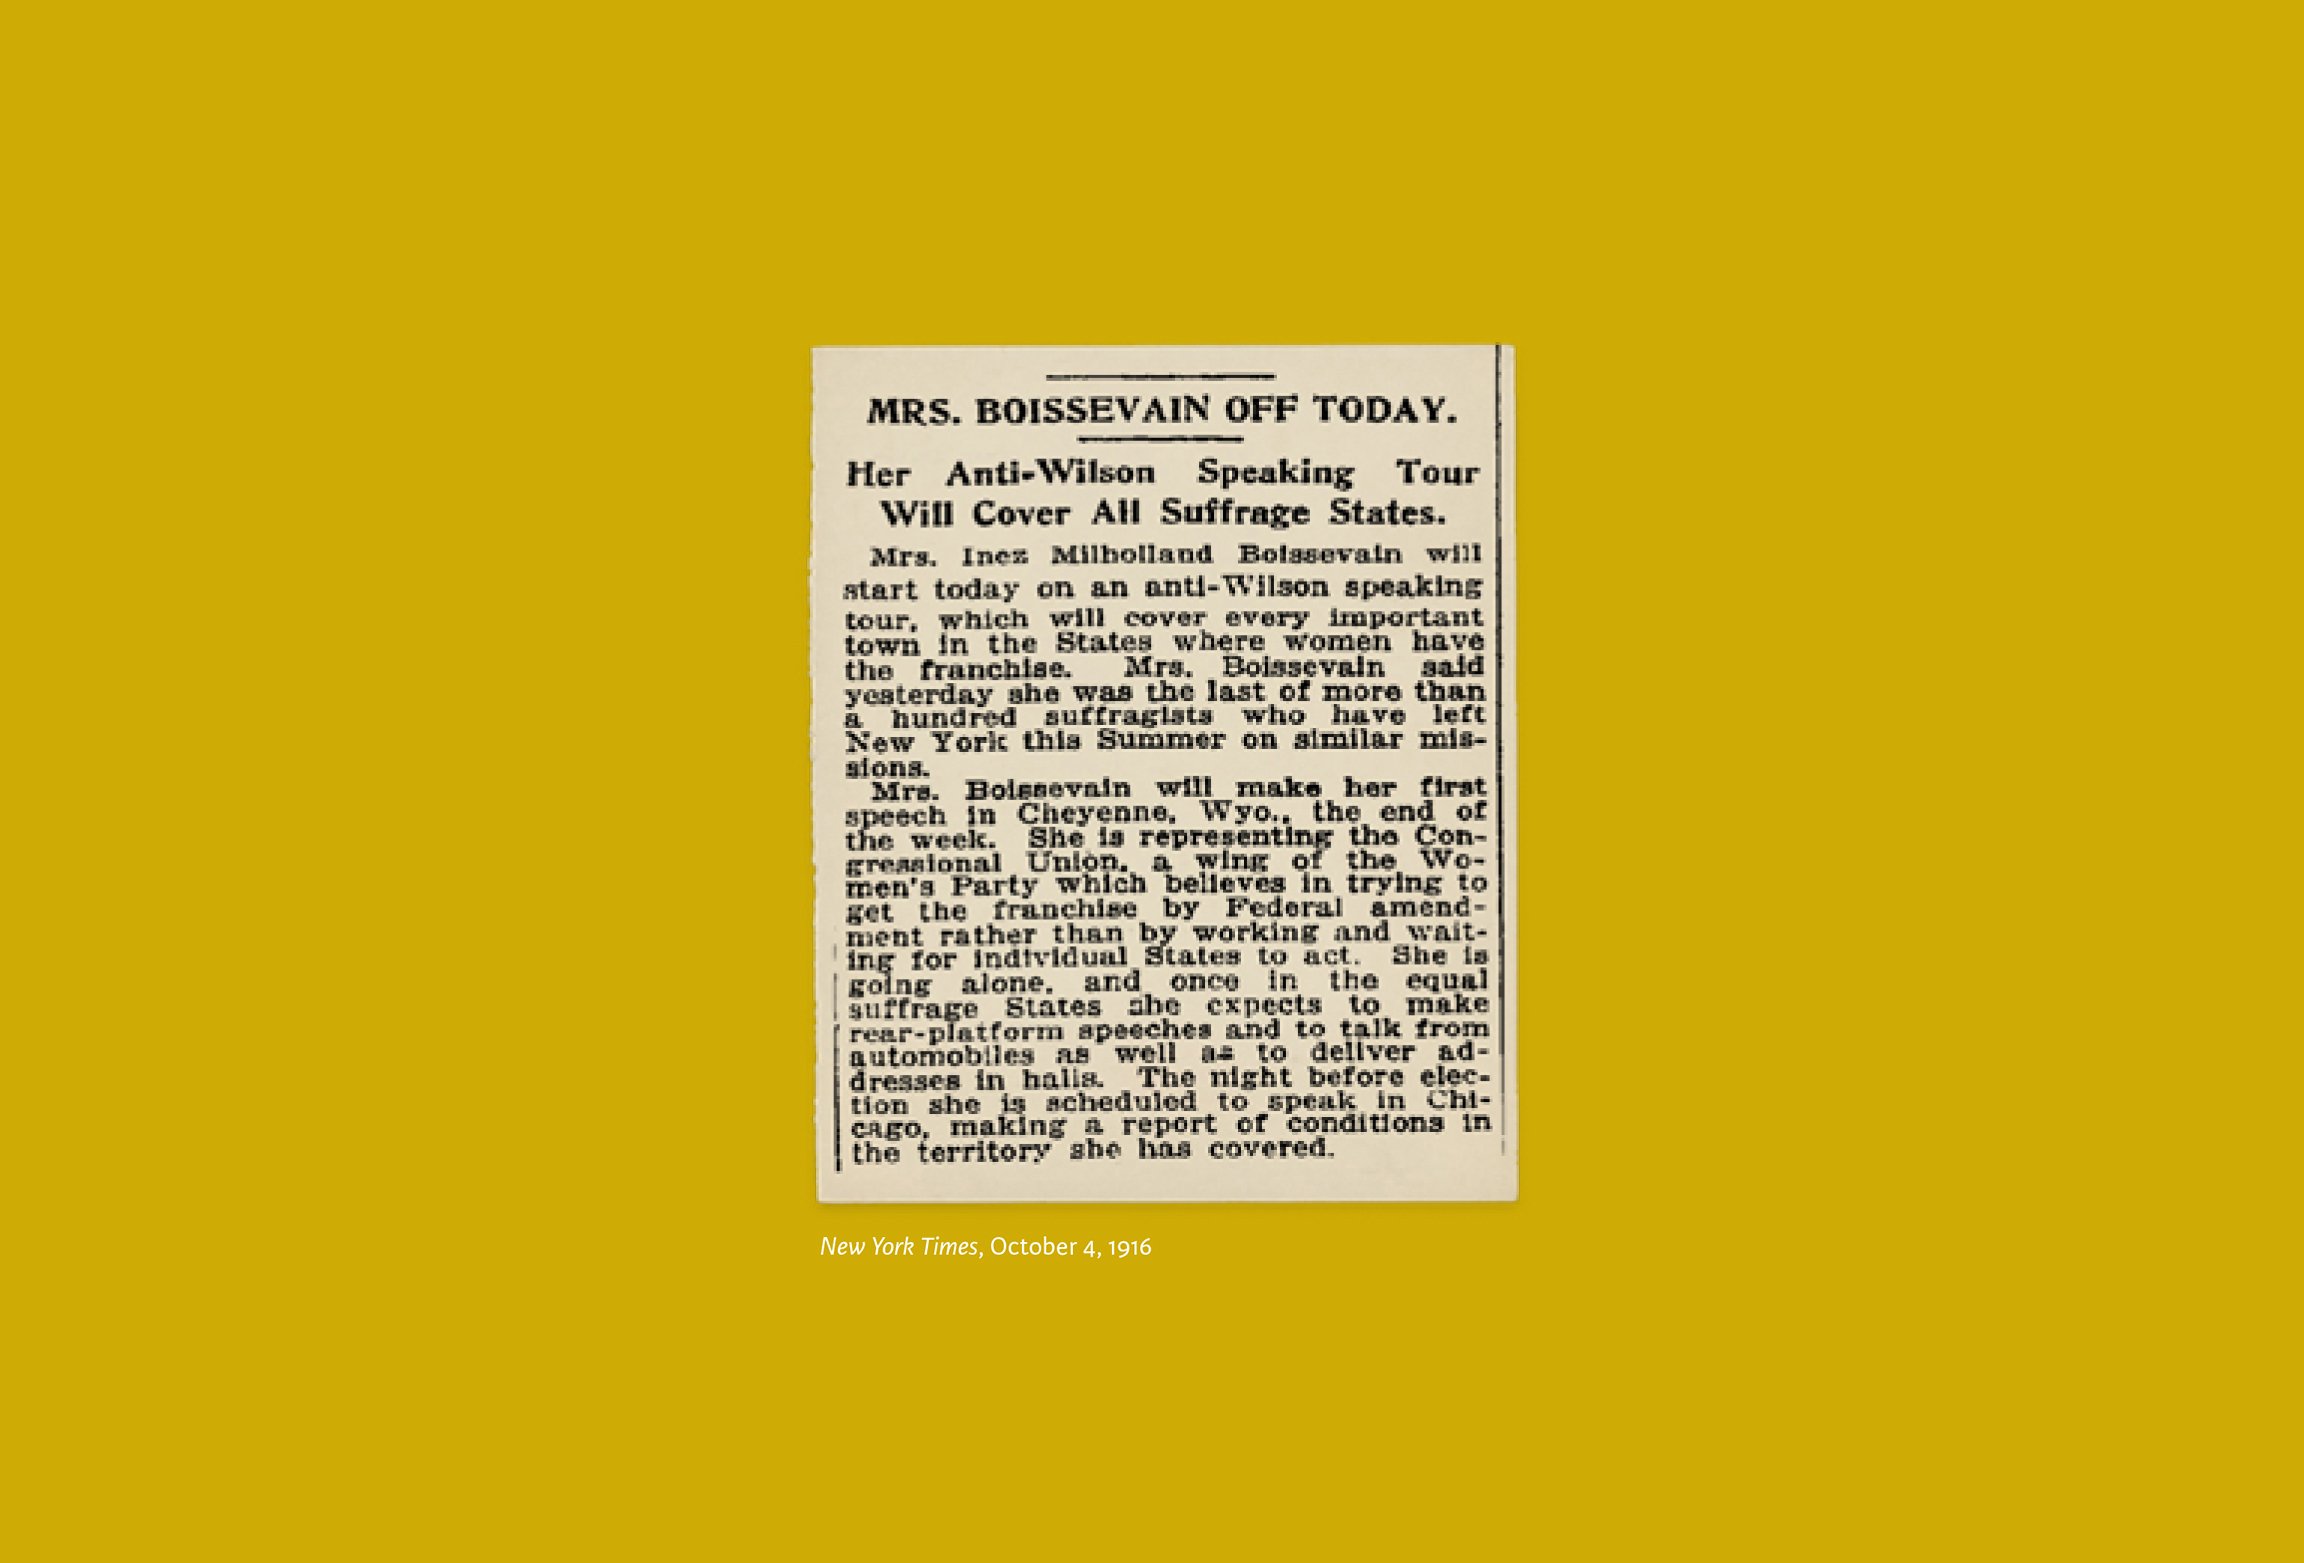 "Mrs. Boissevain Off Today." New York Times, October 4, 1916